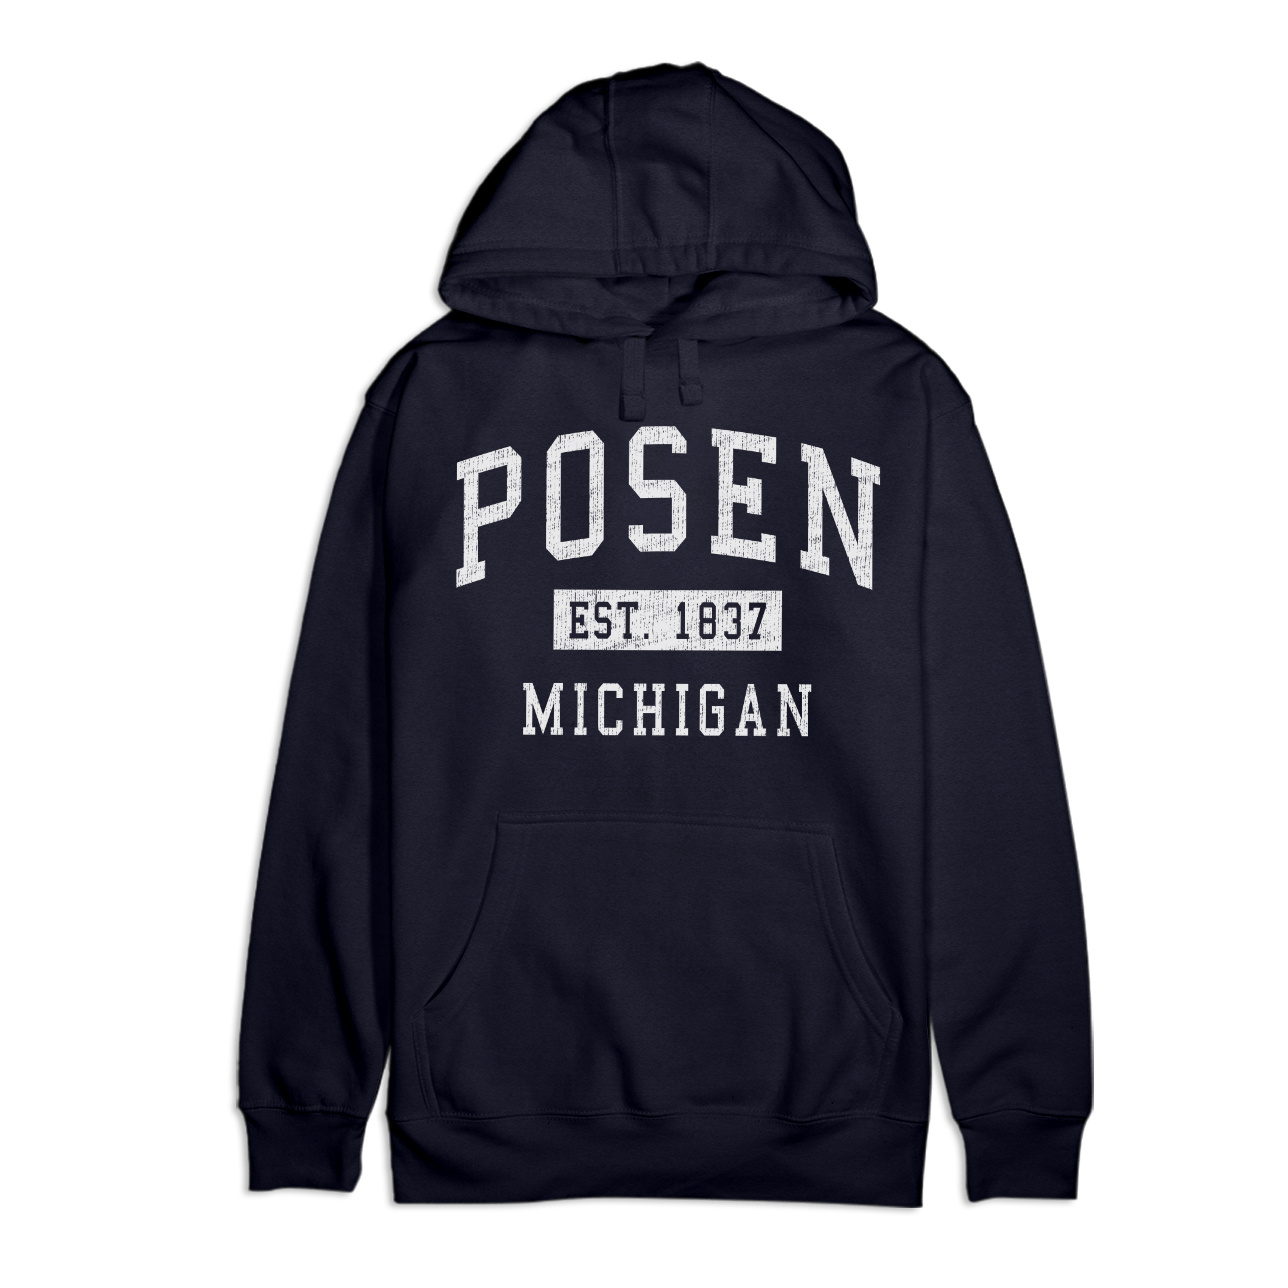 Posen Michigan Classic Established Premium Cotton Hoodie - image 1 of 1